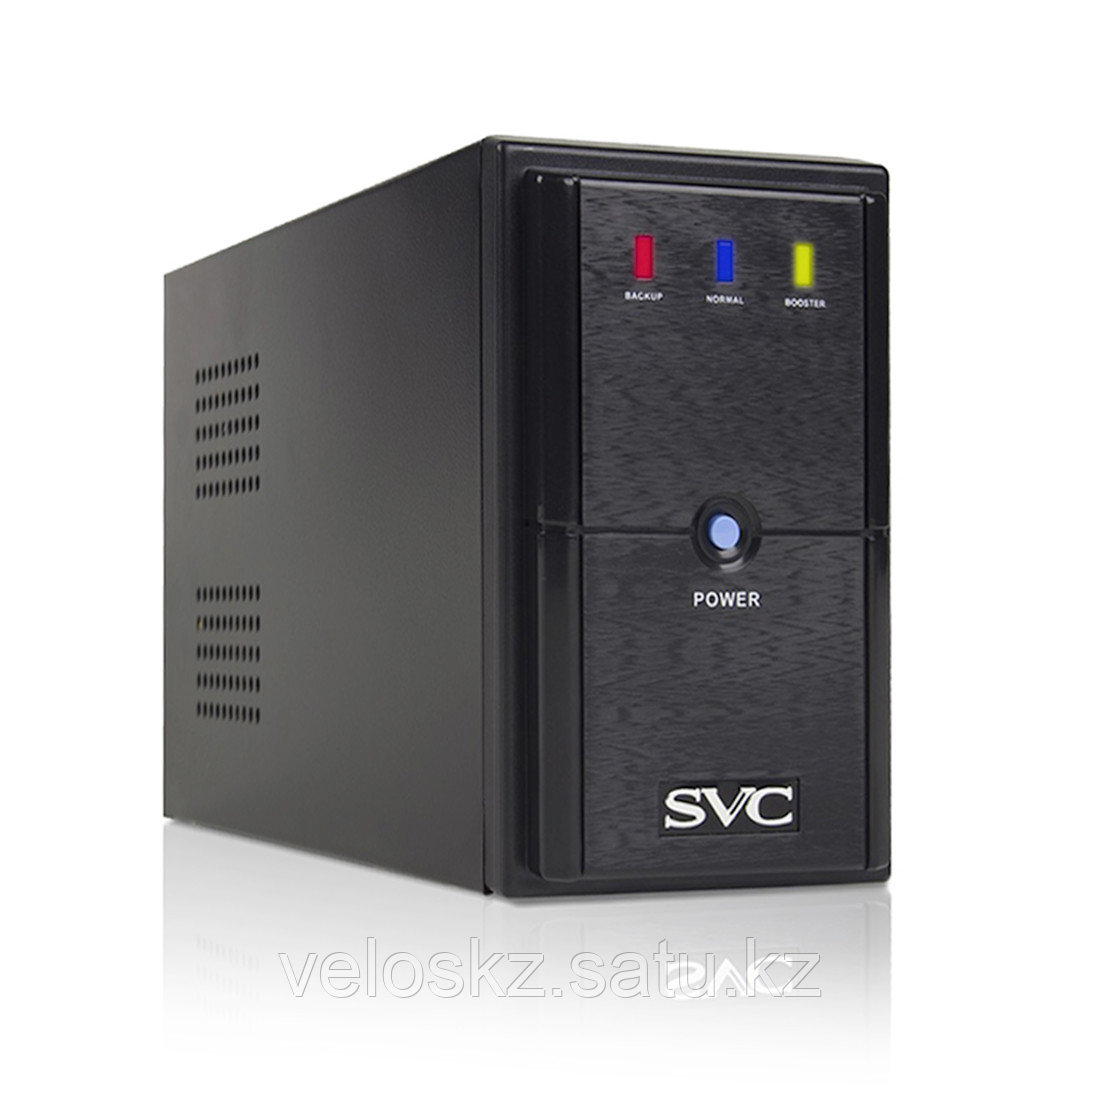 SVC ИБП SVC V-500-L, Мощность 500ВА/300Вт, Диапазон работы AVR: 165-275В, AVR в режиме Booster: 138-292